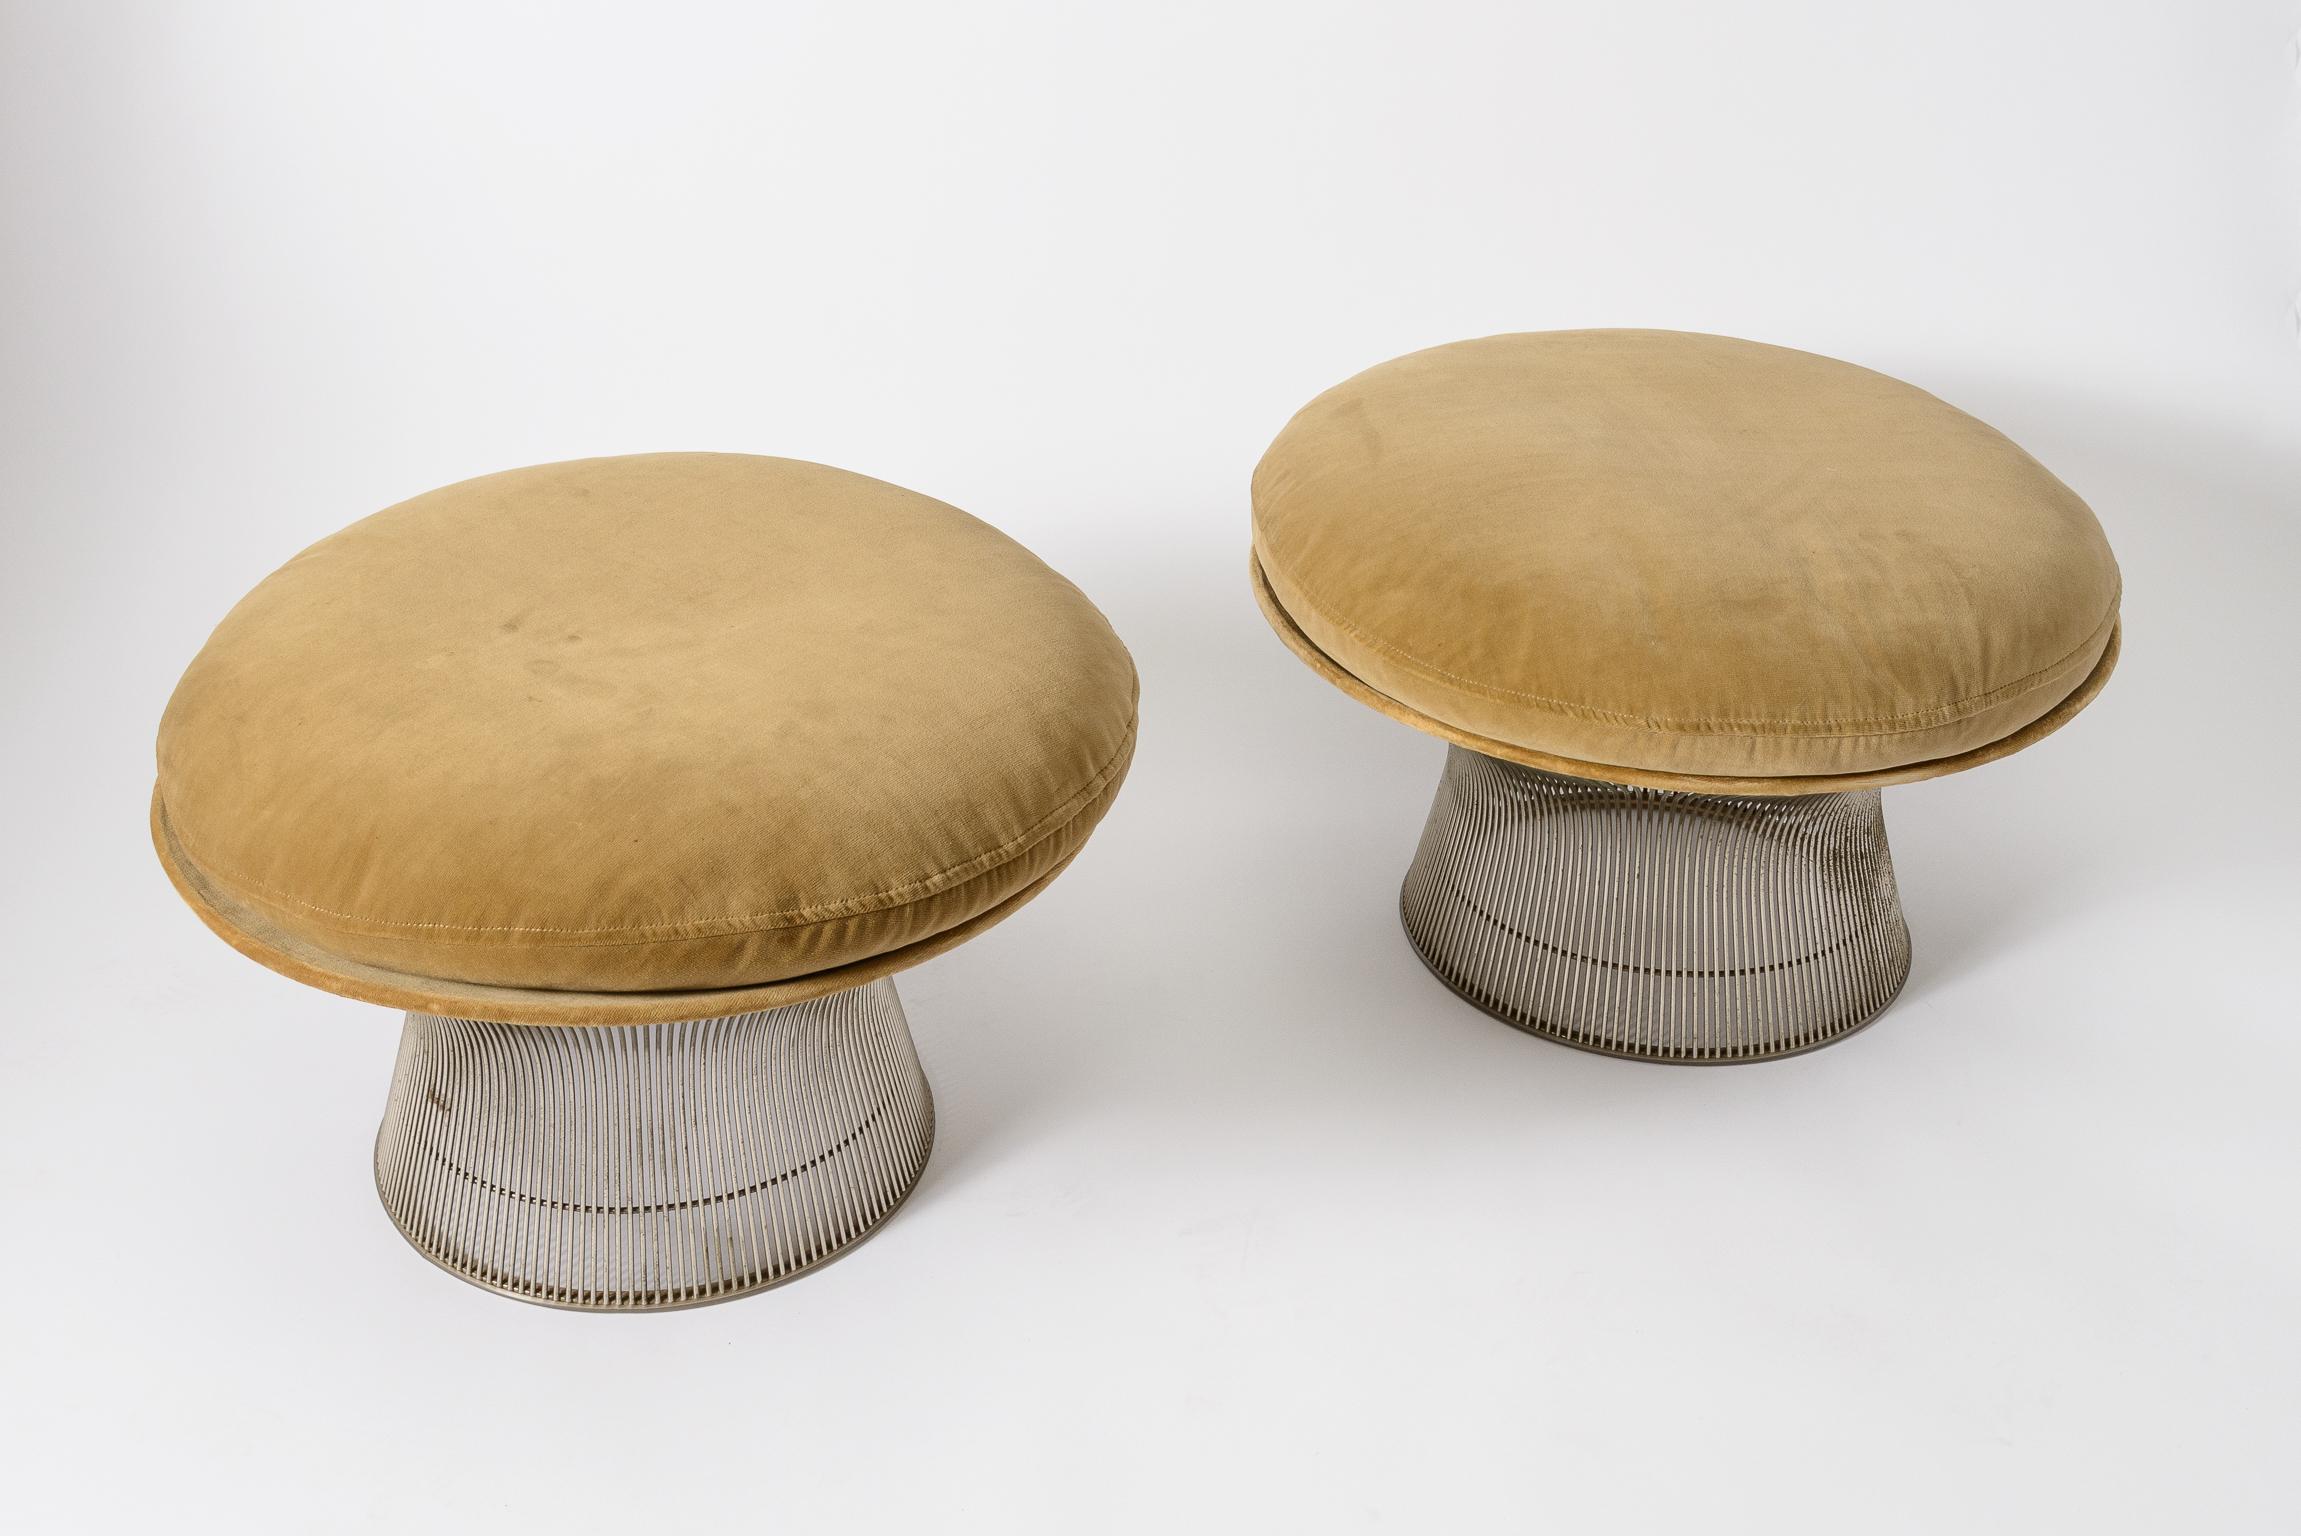 A pair of Warren Platner Ottomans/Stools
manufactured by Knoll
Original velvet Upholstery